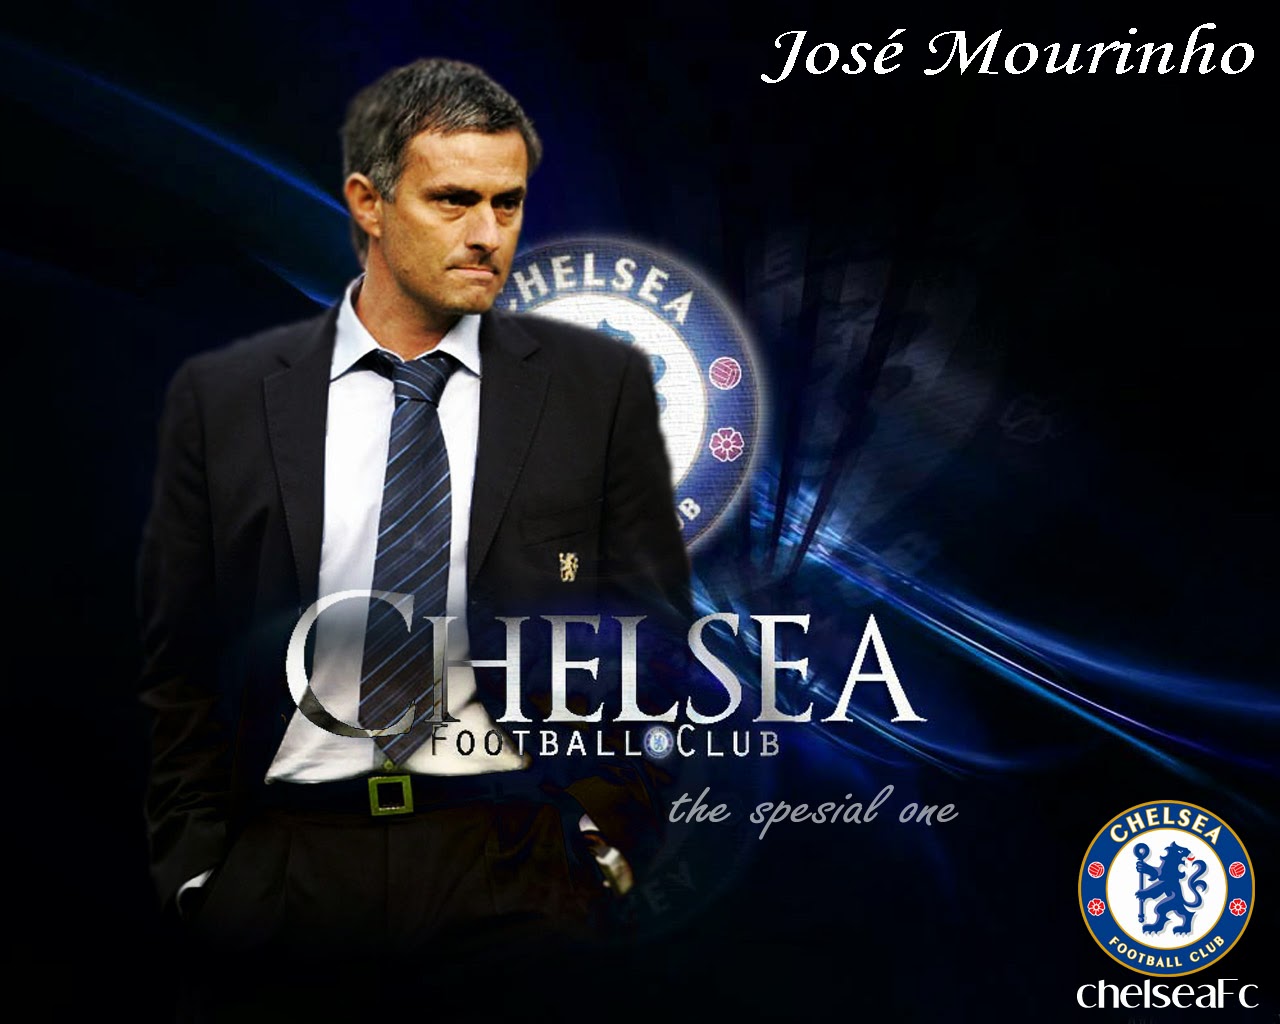 Jose Mourinho Wallpapers - WallpaperSafari